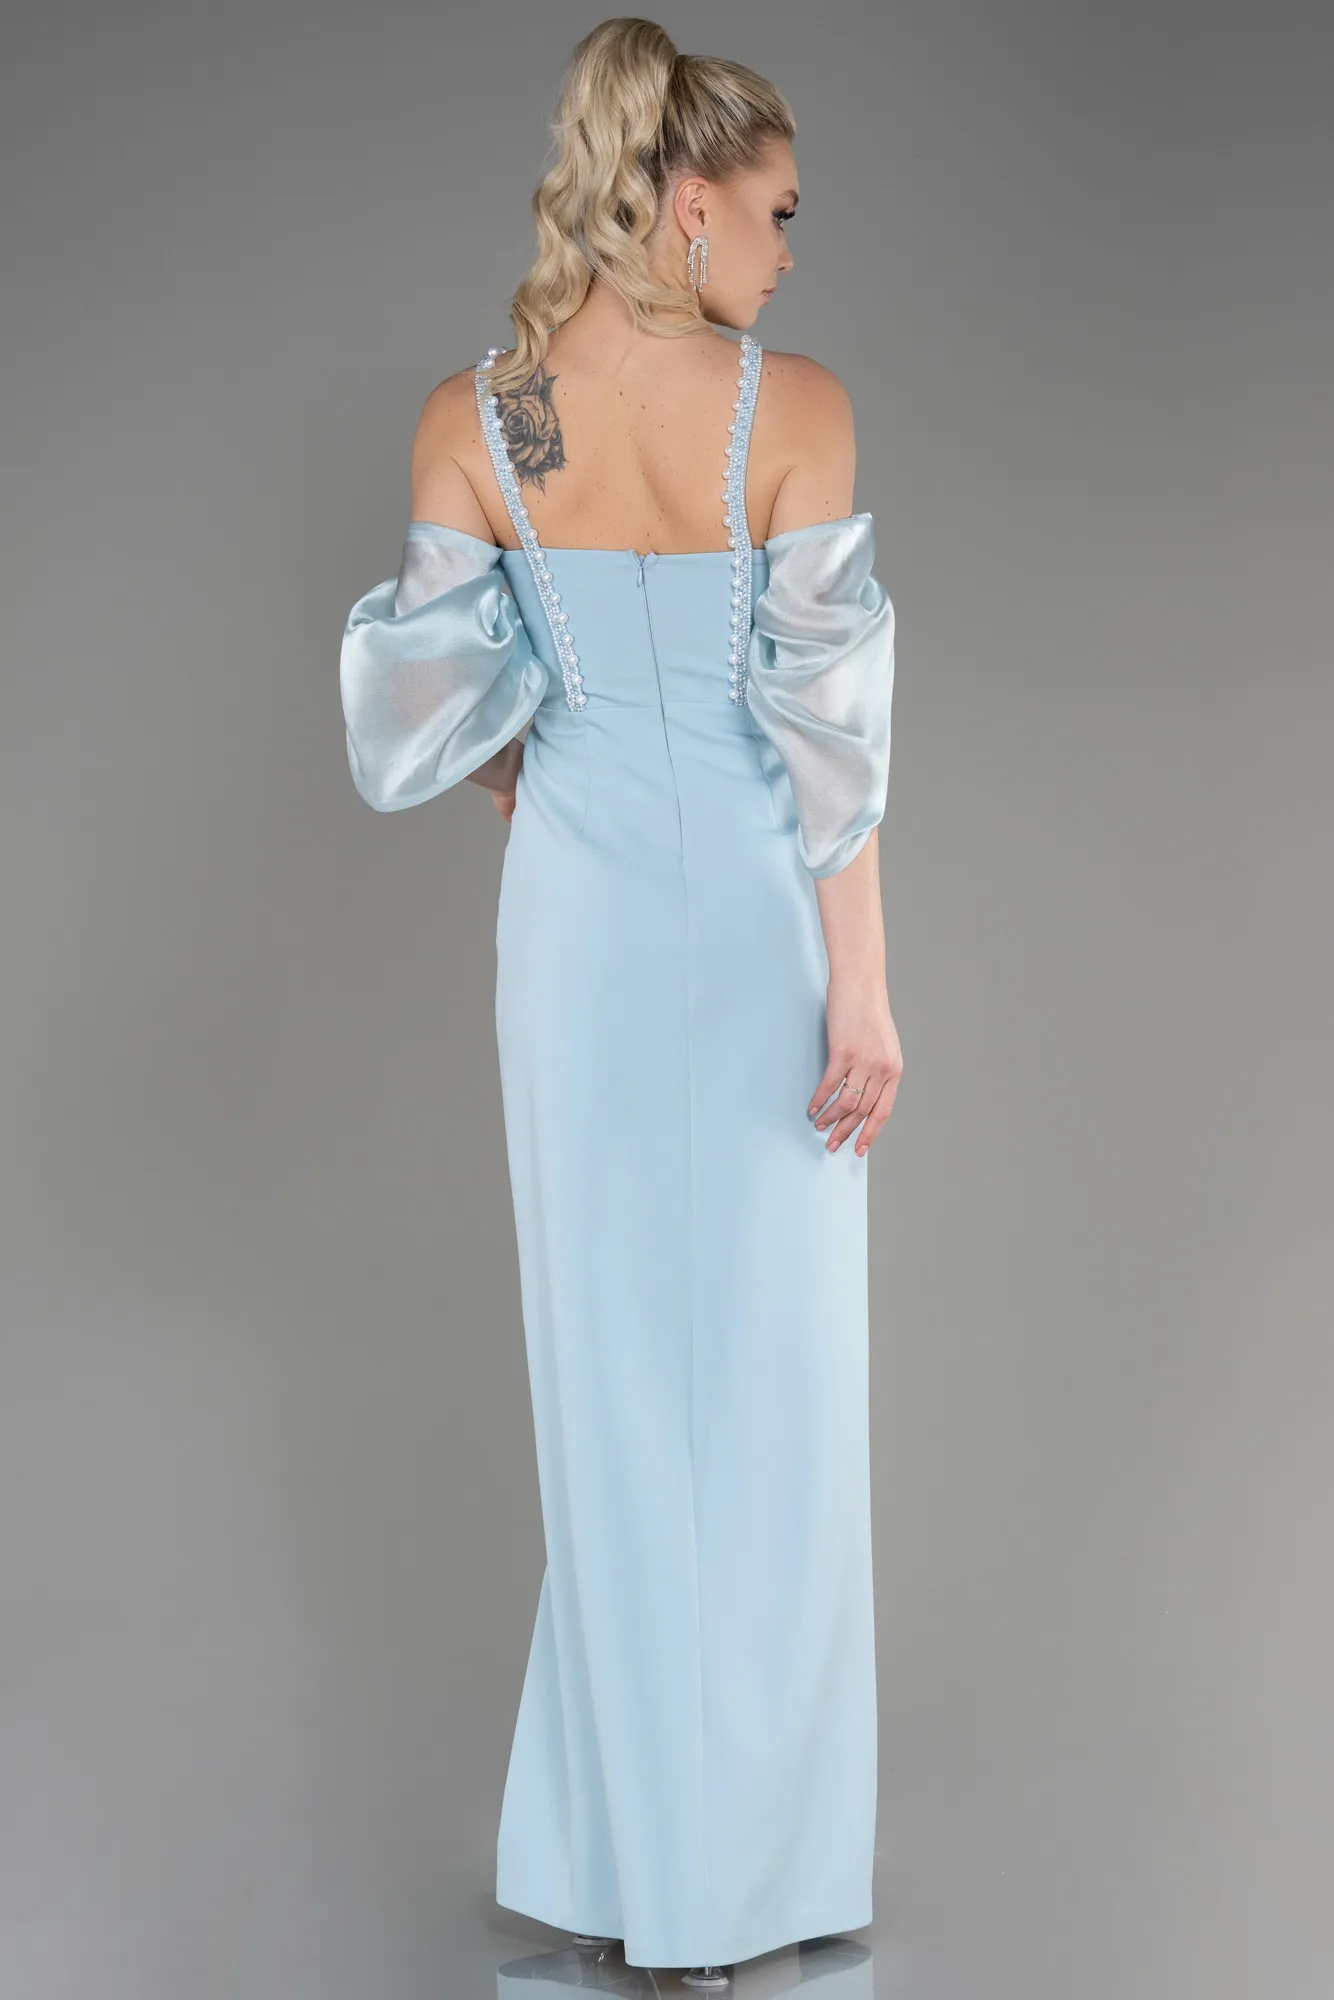 Ice Blue-Long Invitation Dress ABU2911